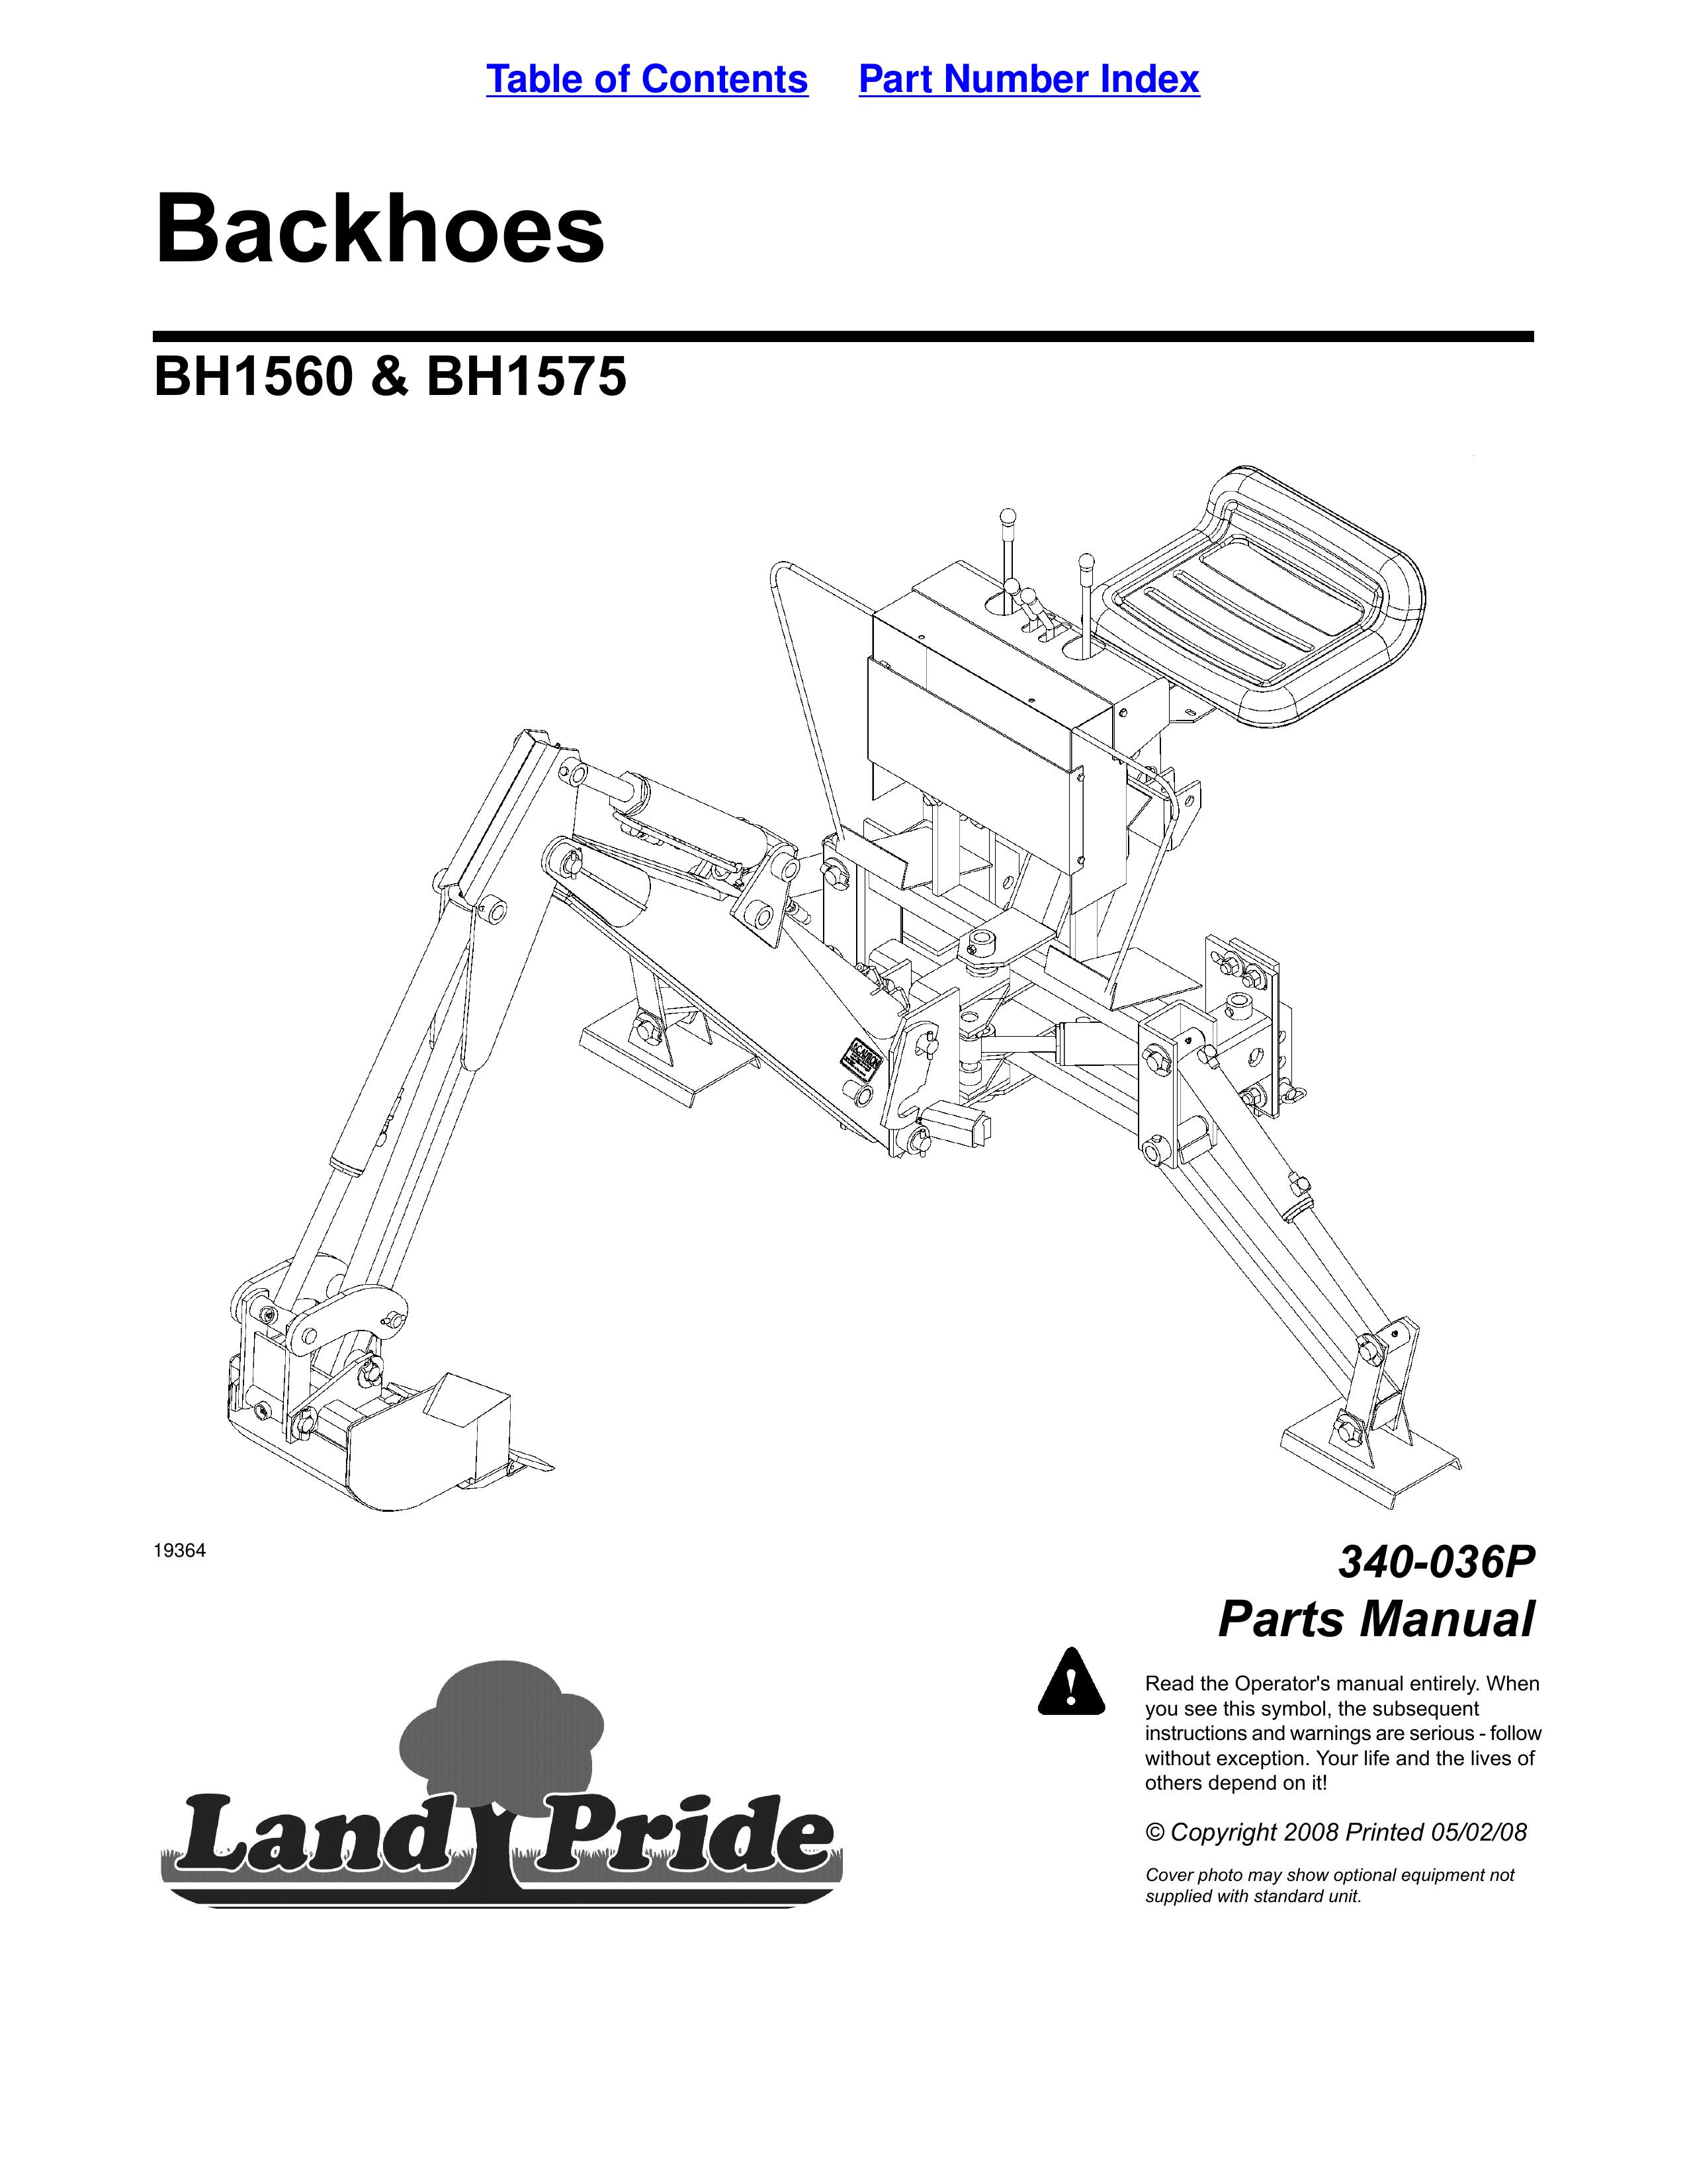 Land Pride BH1575 Compact Excavator User Manual